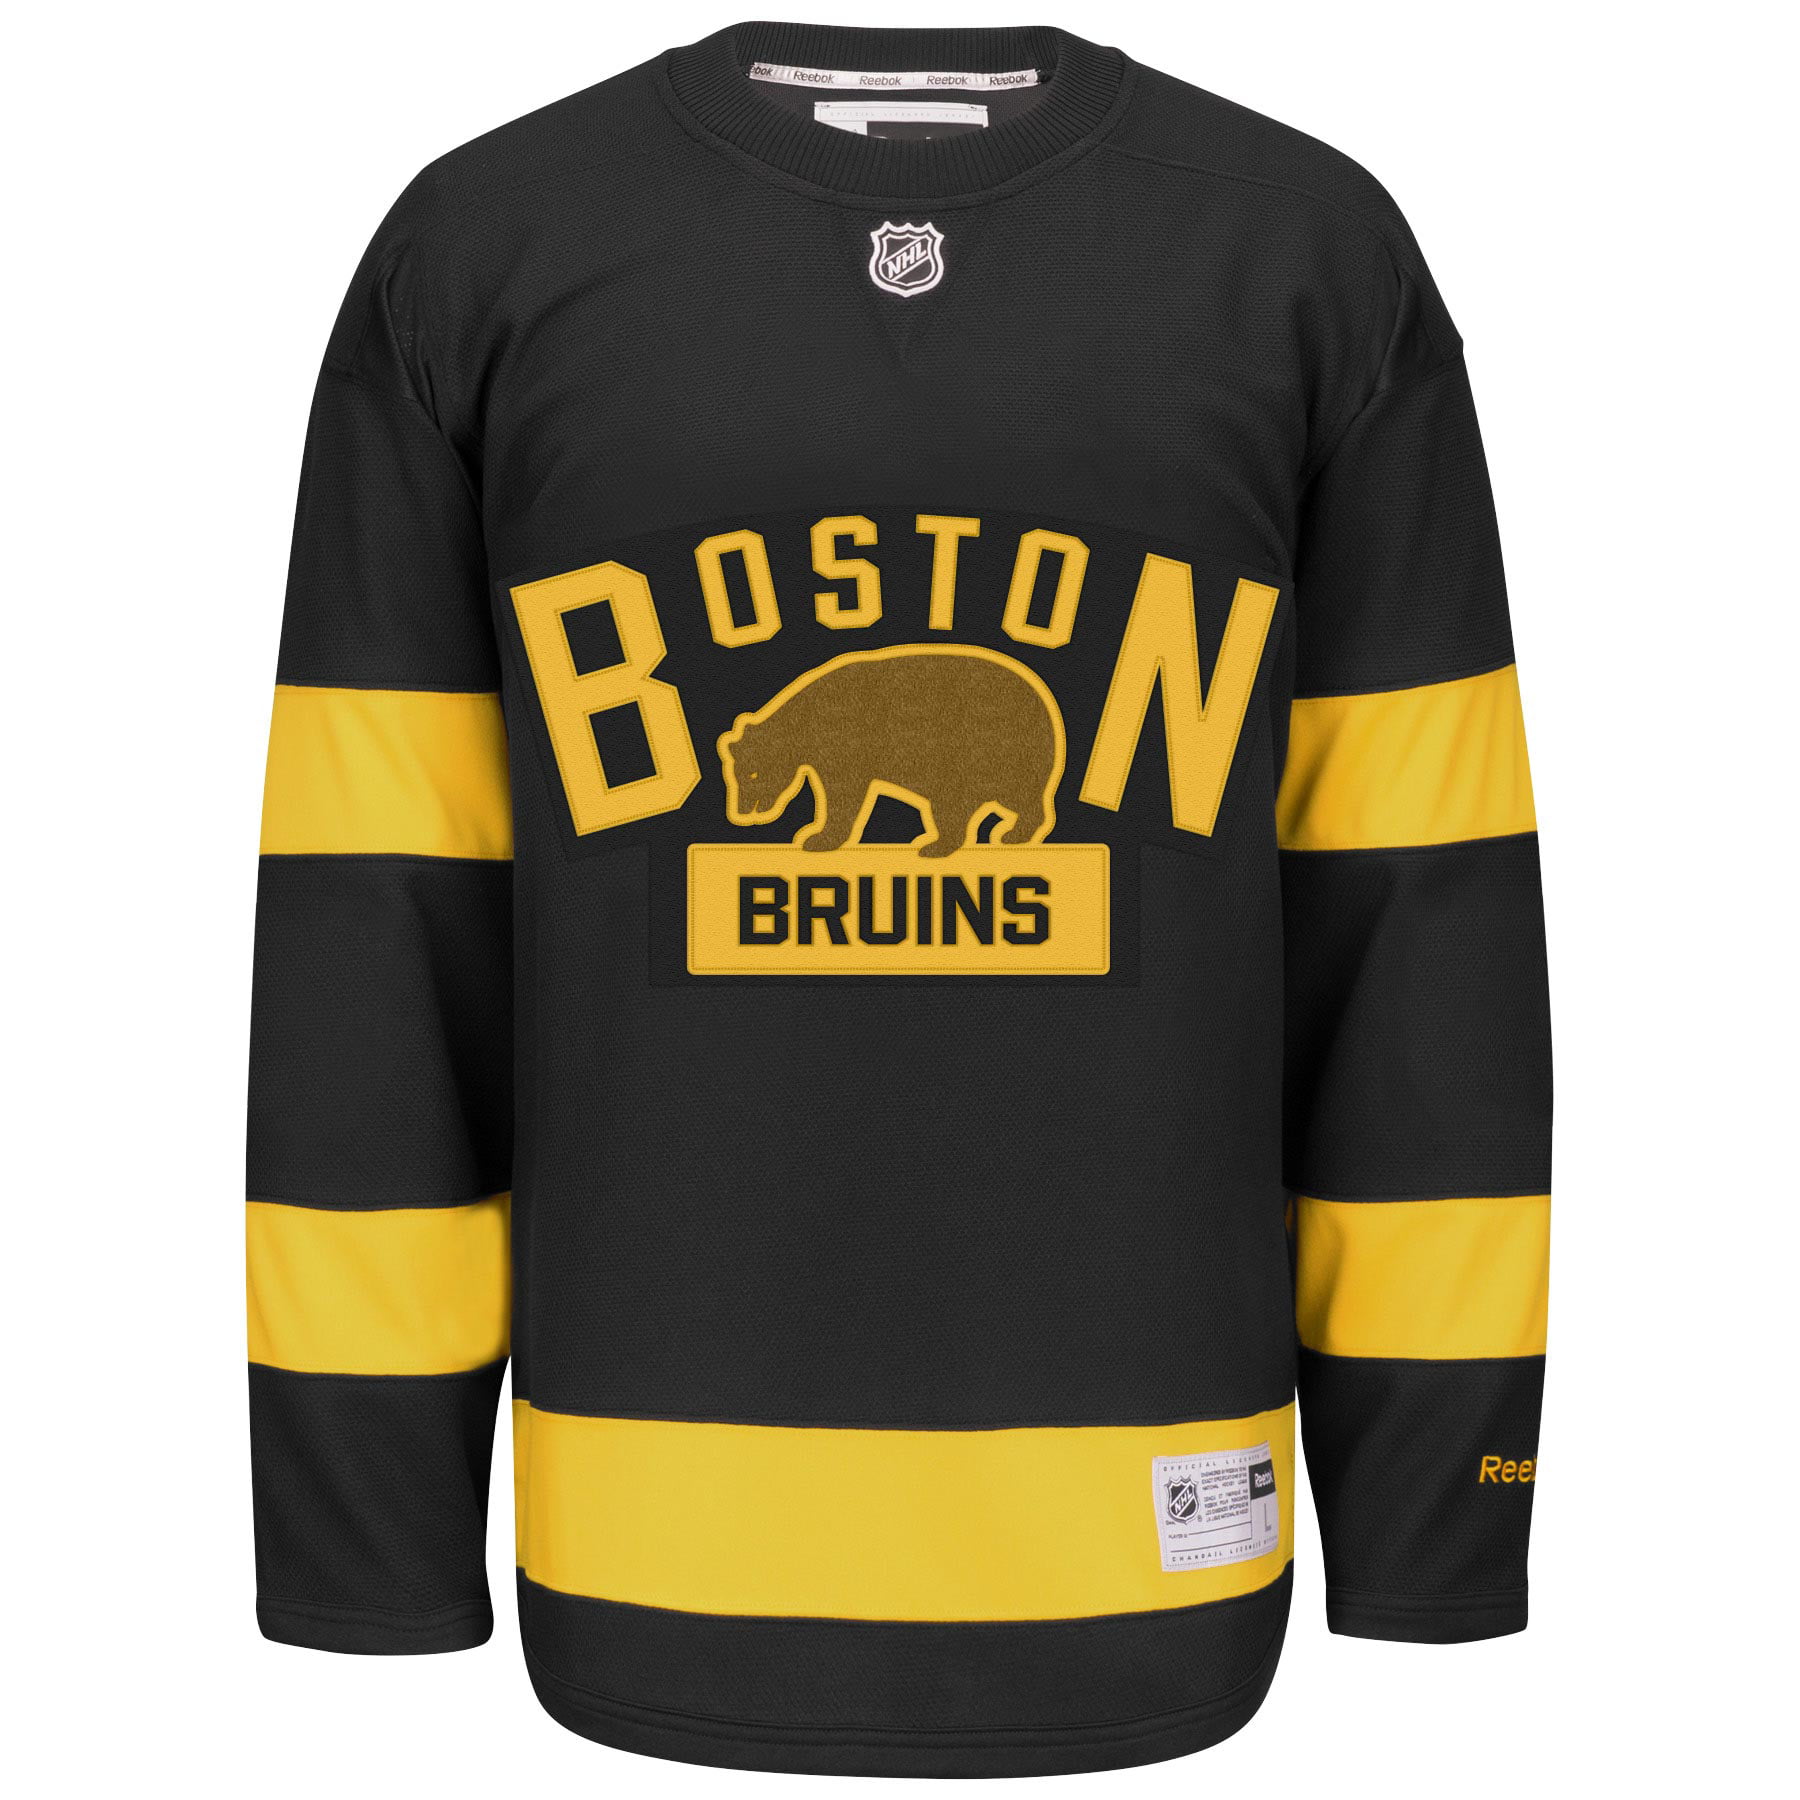 Boston Bruins Reebok Premier Youth Replica Alternate ...